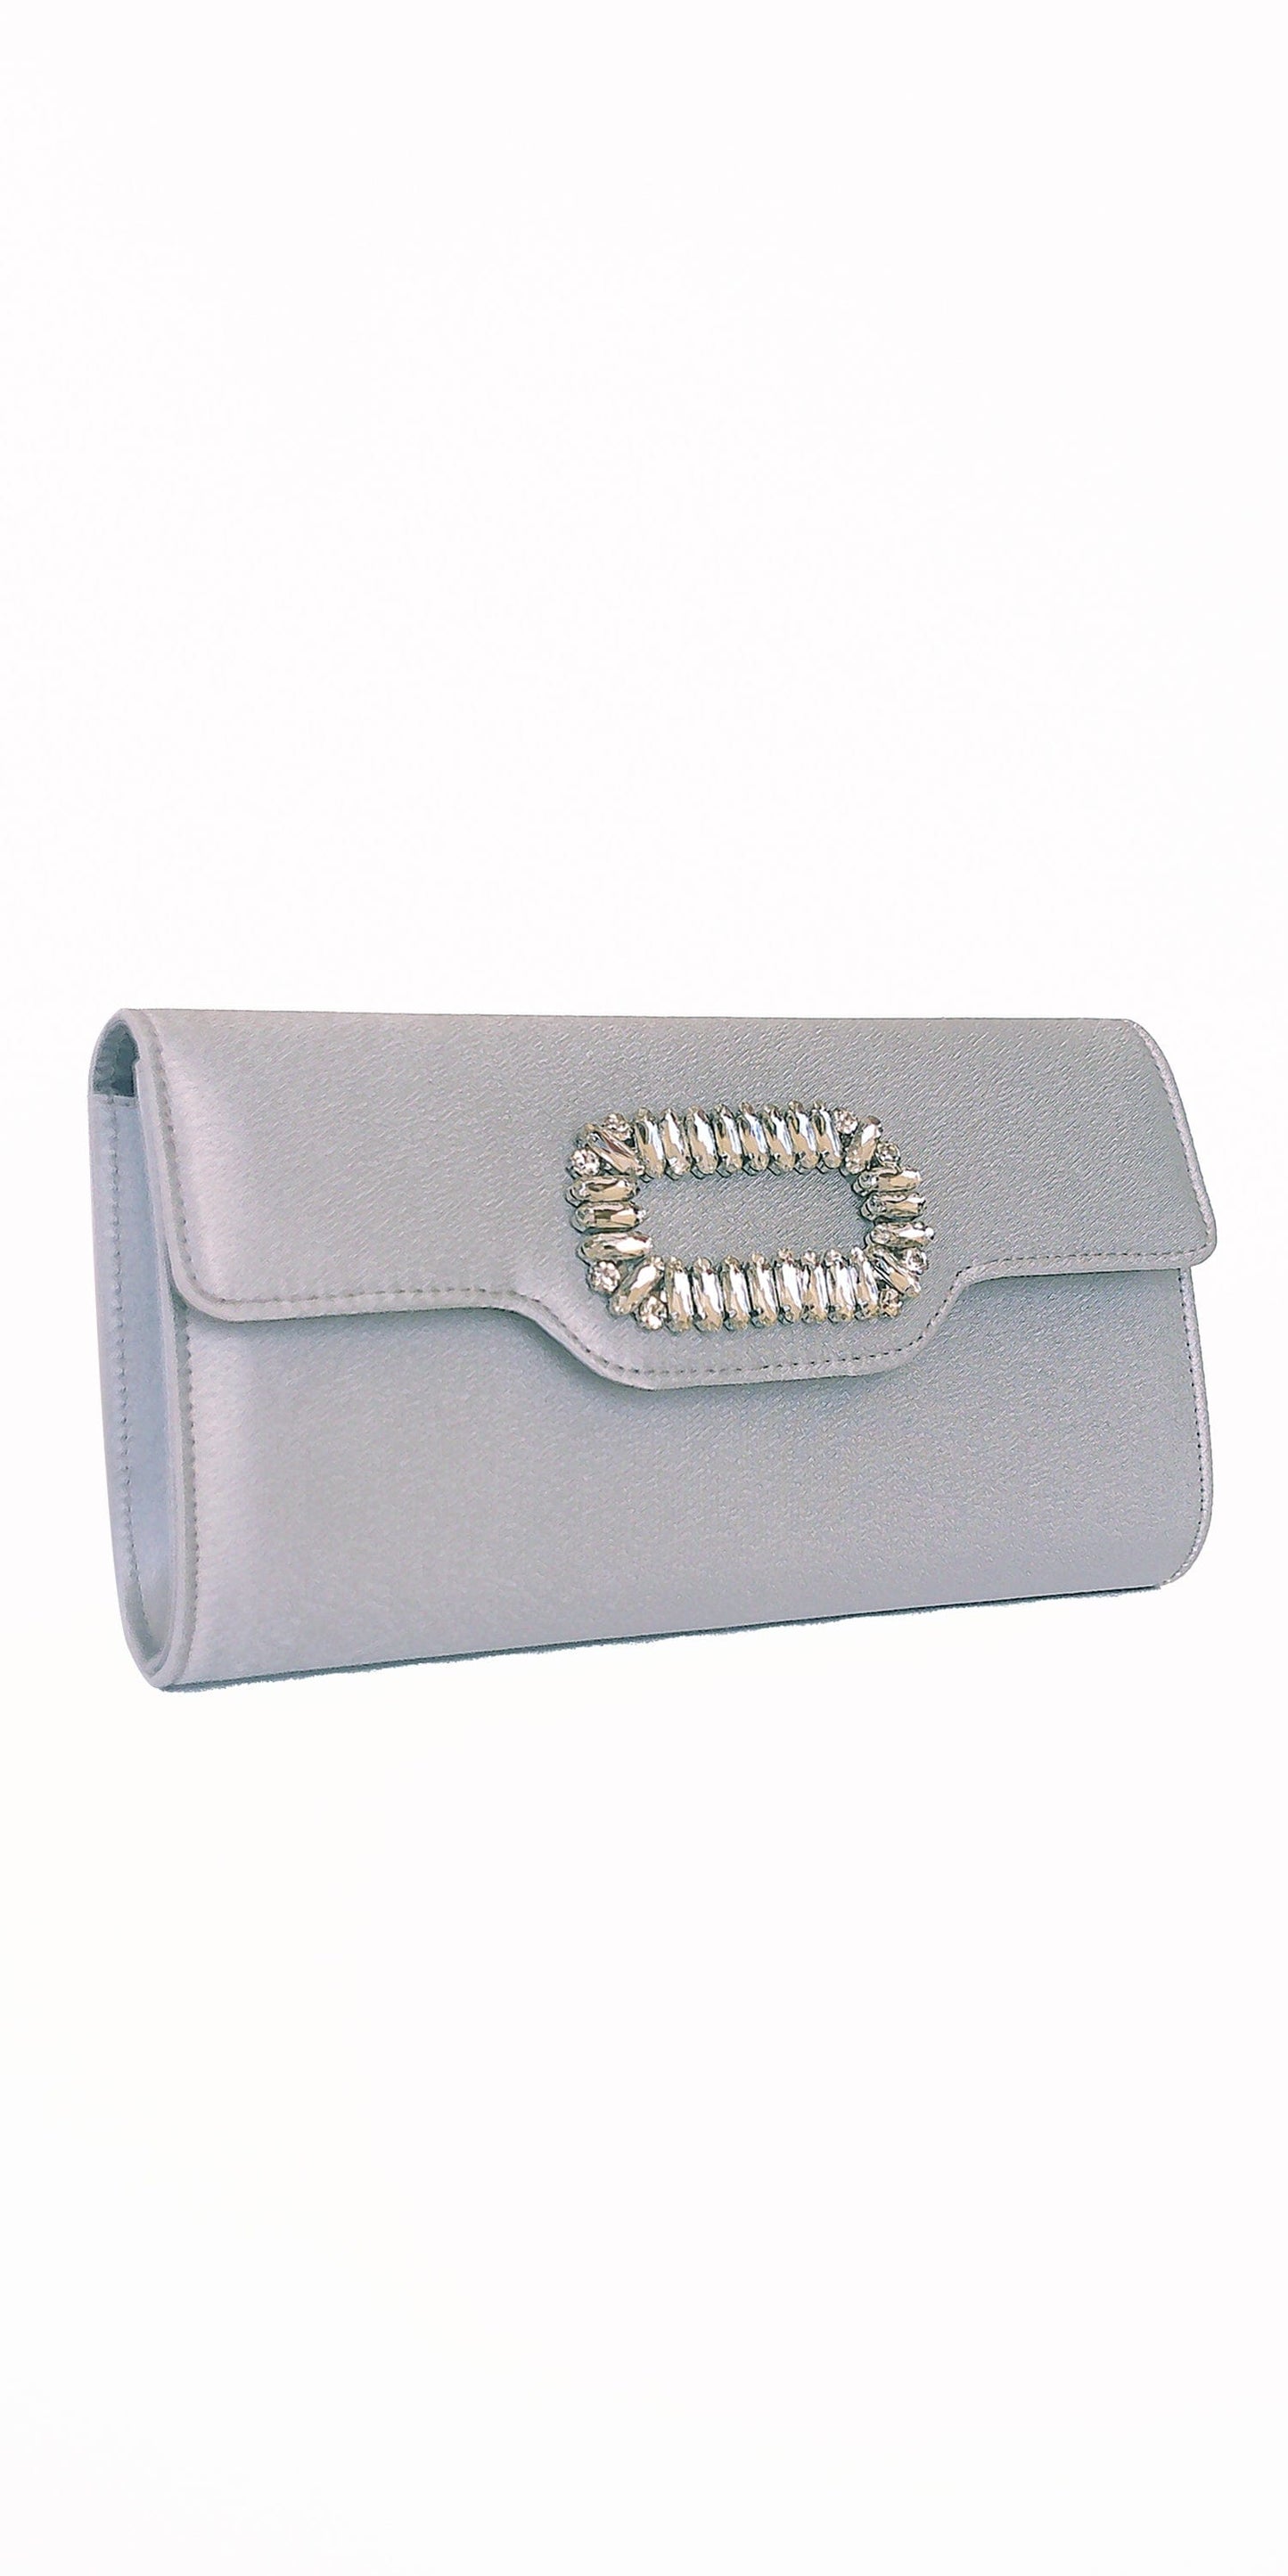 Camille La Vie Flap Satin Handbag with Brooch Detail OS / silver